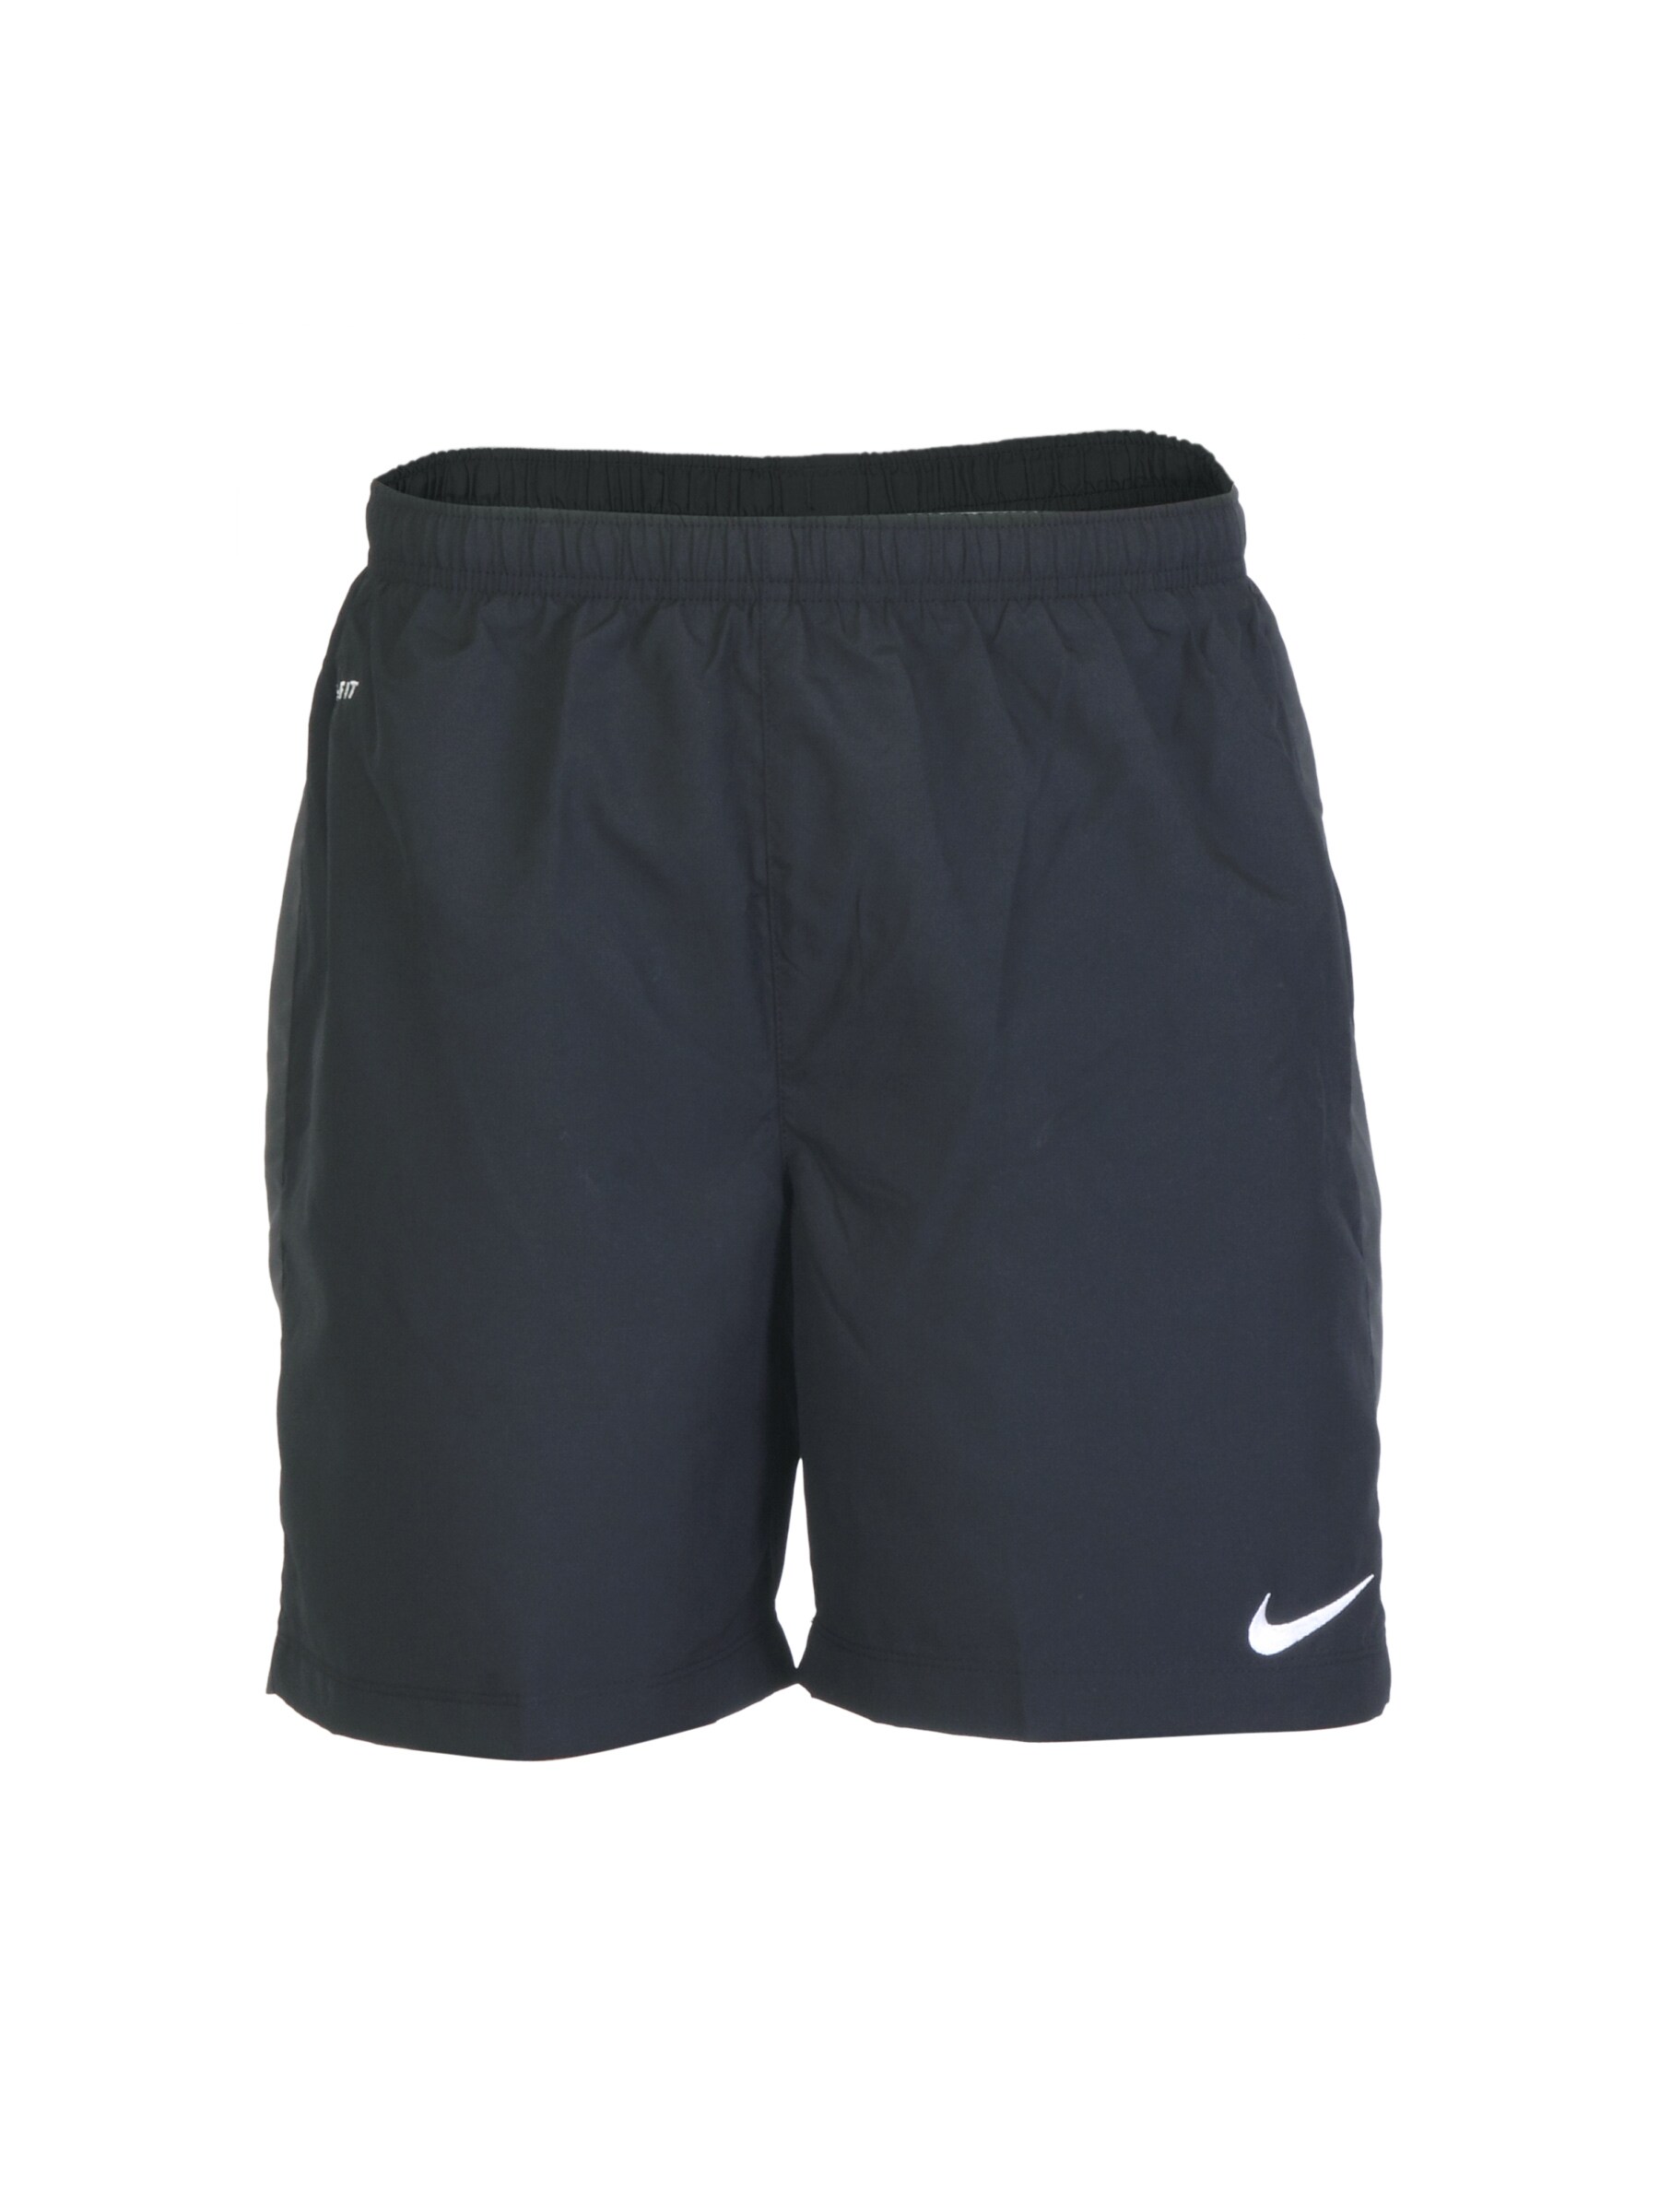 Nike Men Football Black Shorts